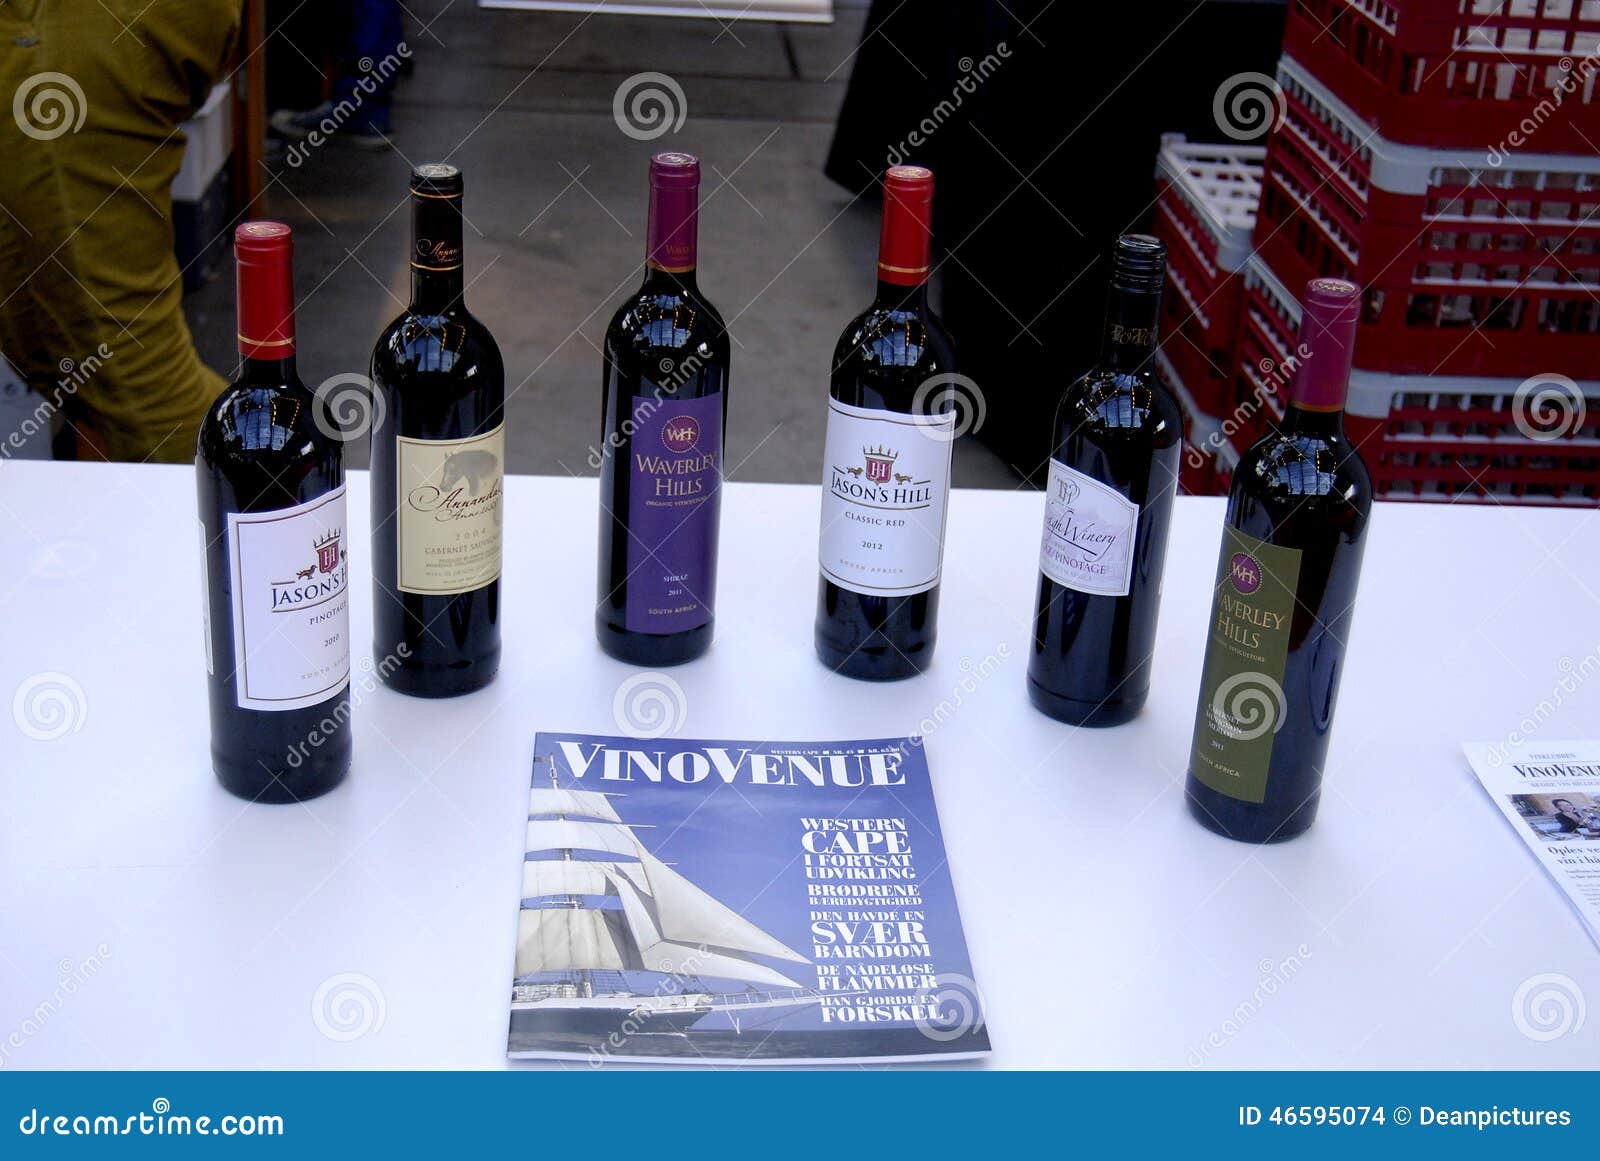 wine-tasting-book-fair-bogforum-stock-photos-free-royalty-free